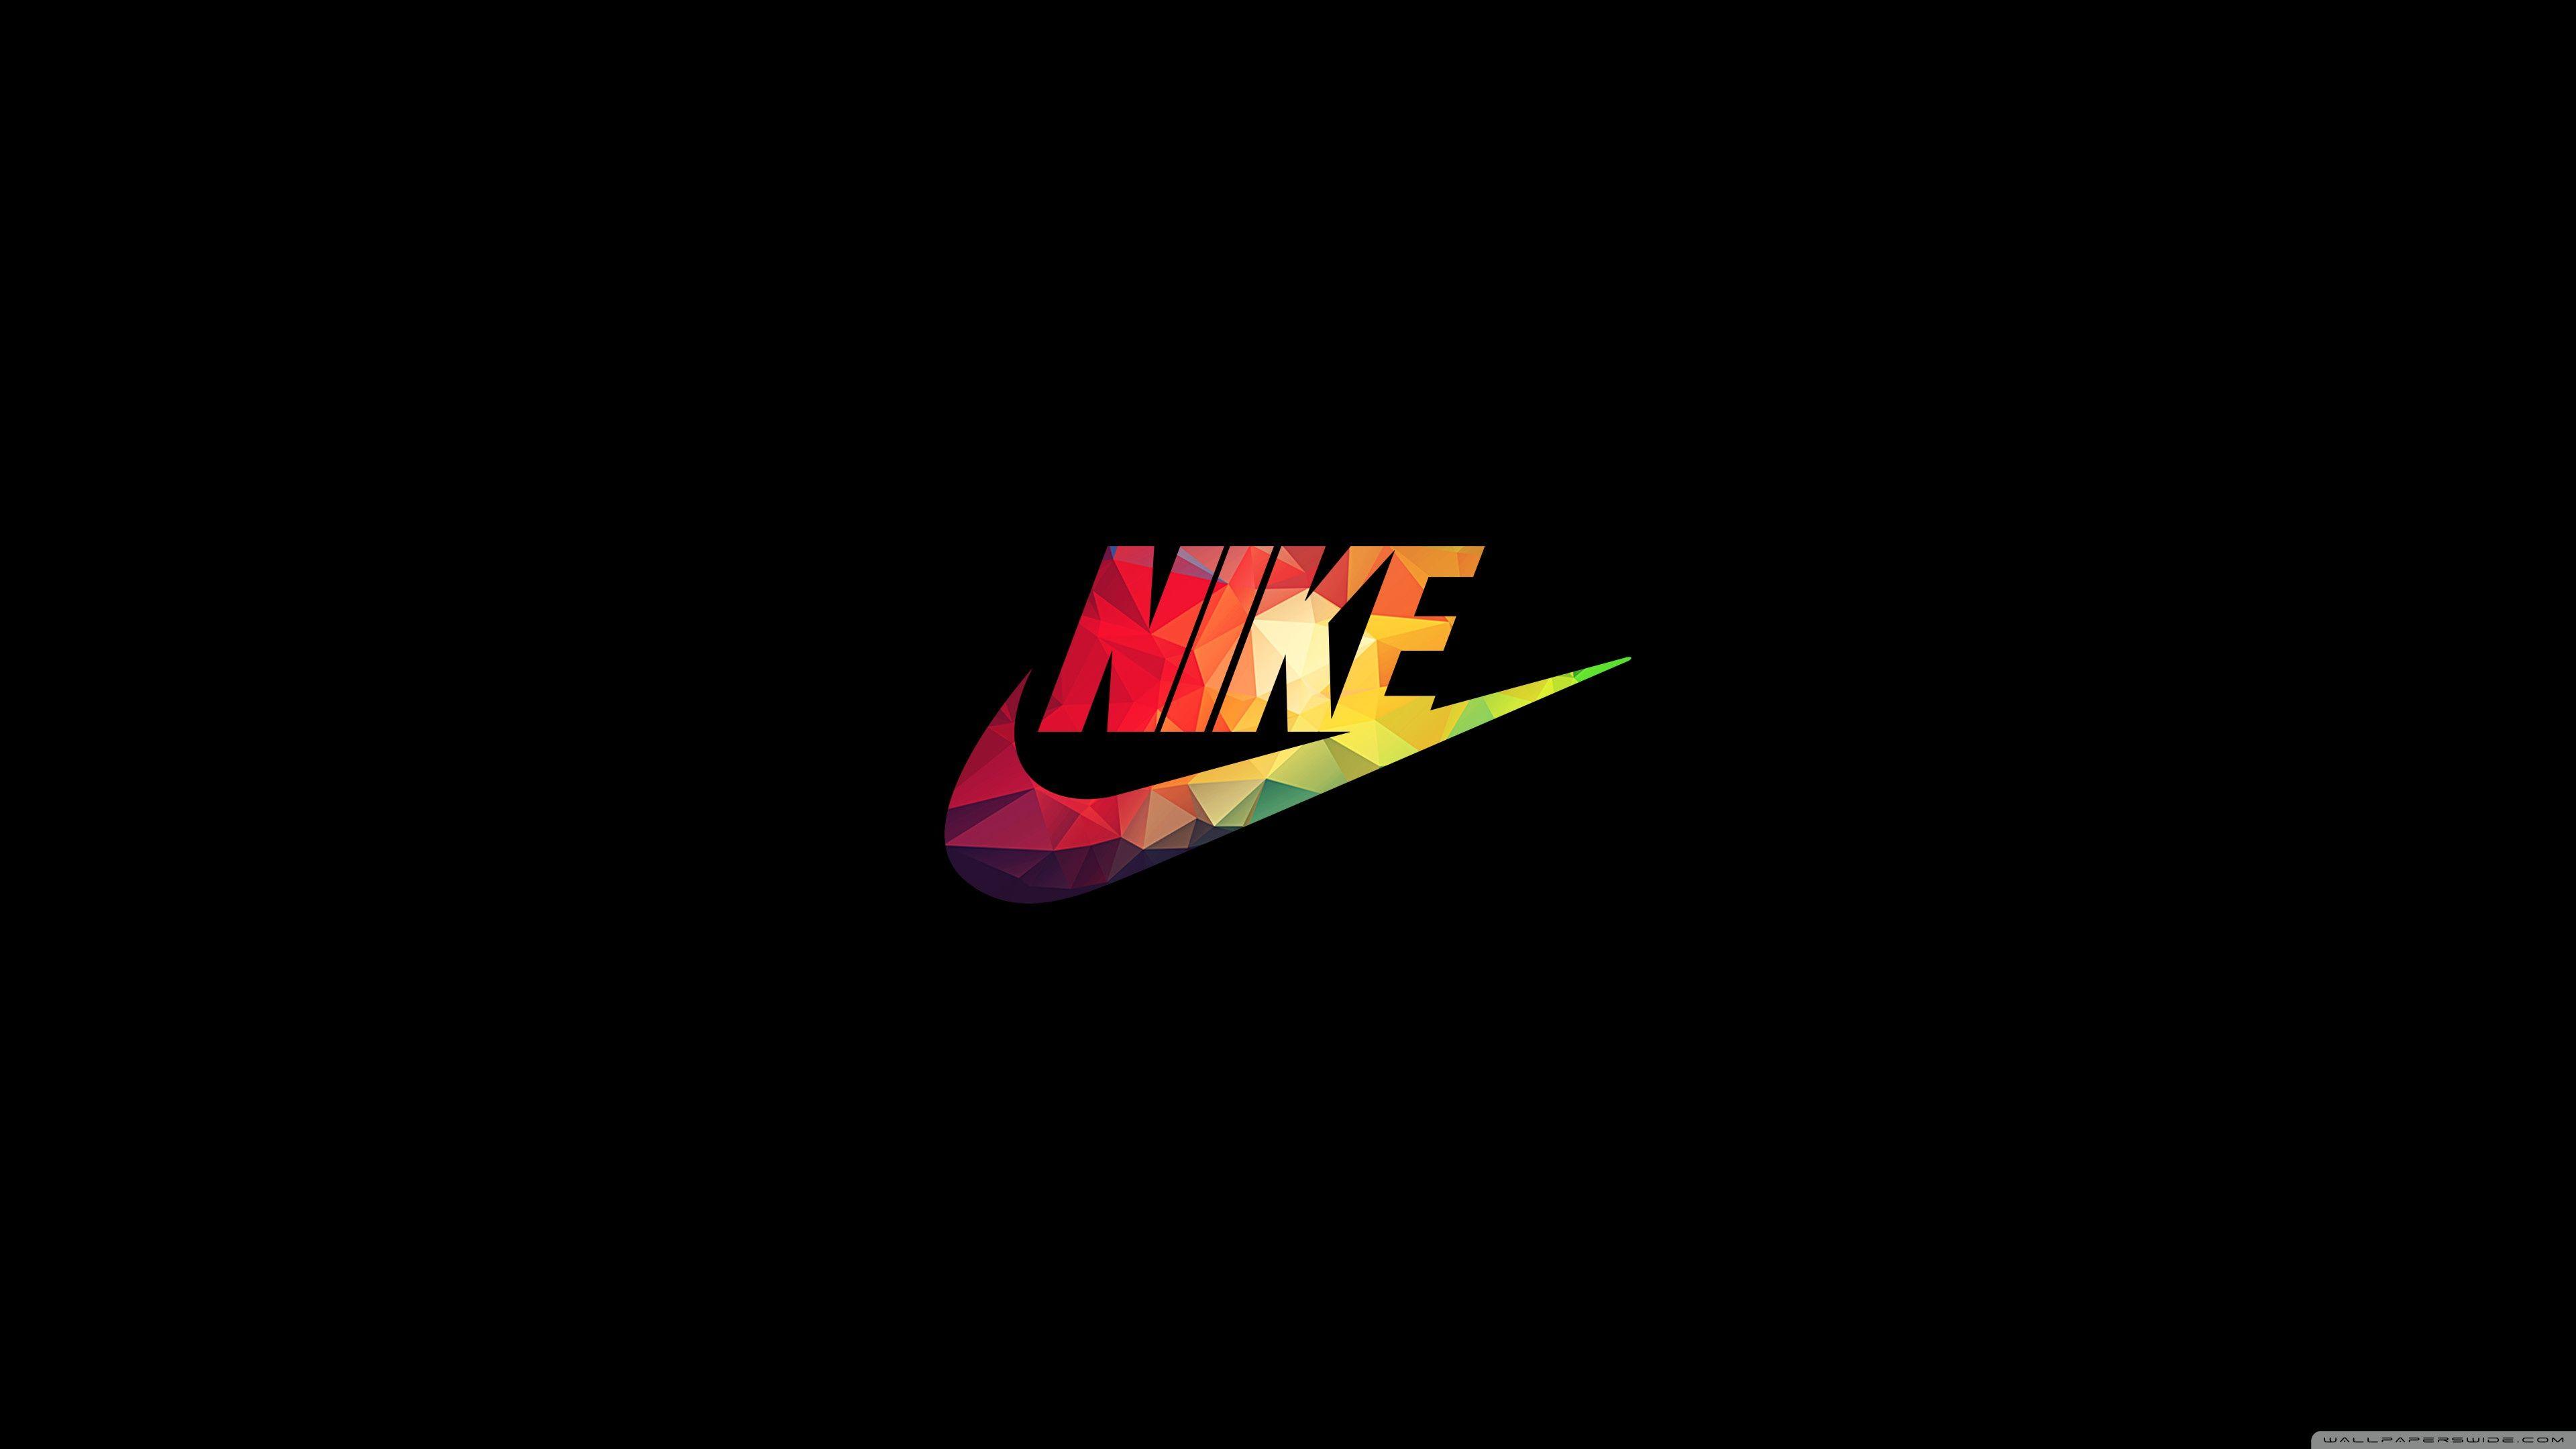  Geile Nike Hintergrundbild 3840x2160. 4K Nike Wallpaper Free 4K Nike Background